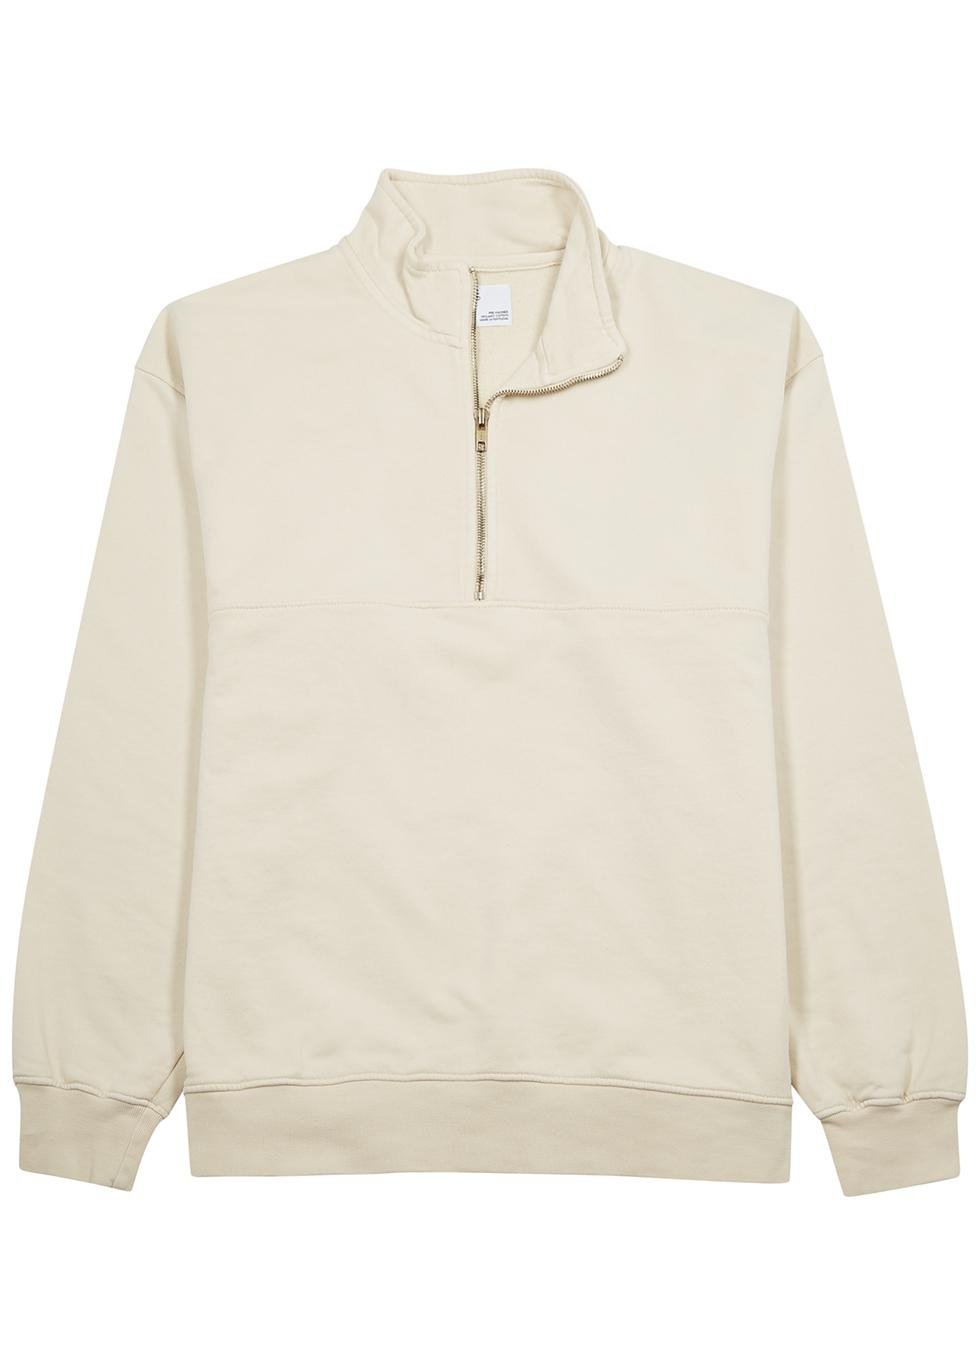 Half-zip cotton sweatshirt by COLORFUL STANDARD